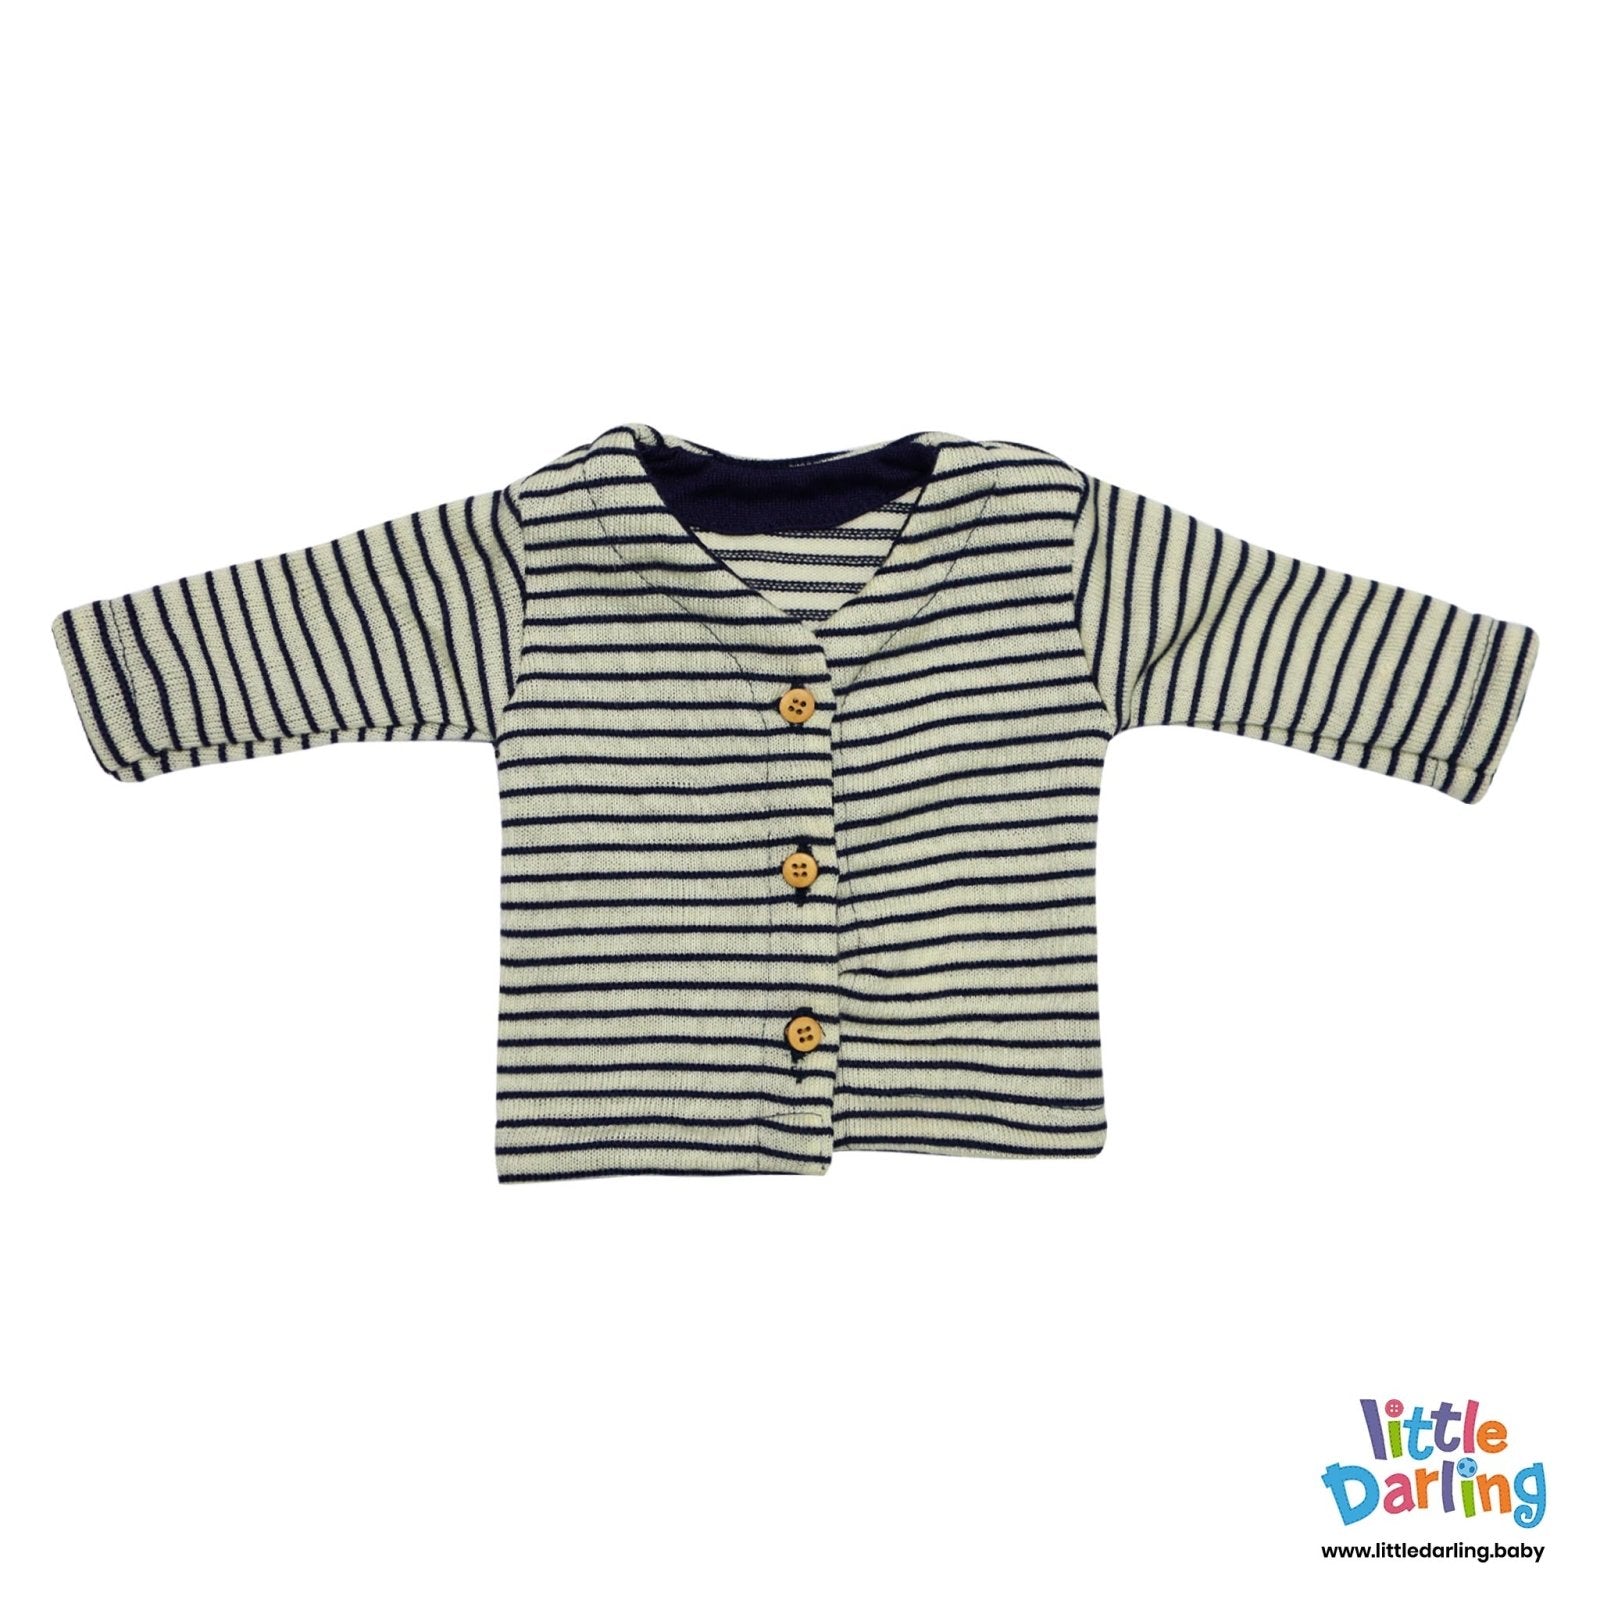 4 Pcs Woolen Gift Set Off White & Denim Stripes by Little Darling